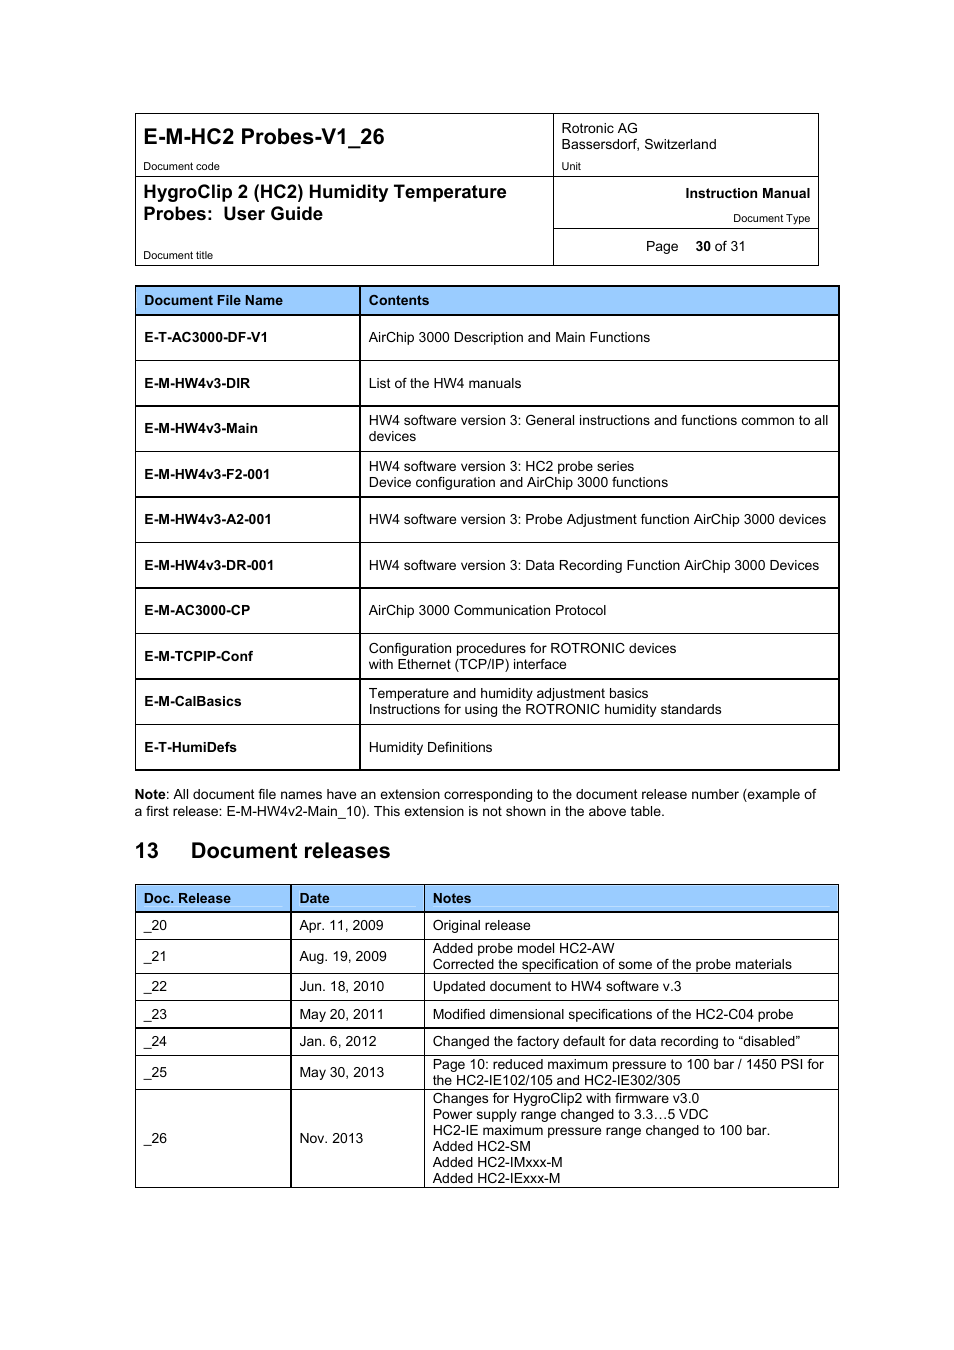 E-m-hc2 probes-v1_26, 13 document releases | ROTRONIC HC2 User Manual